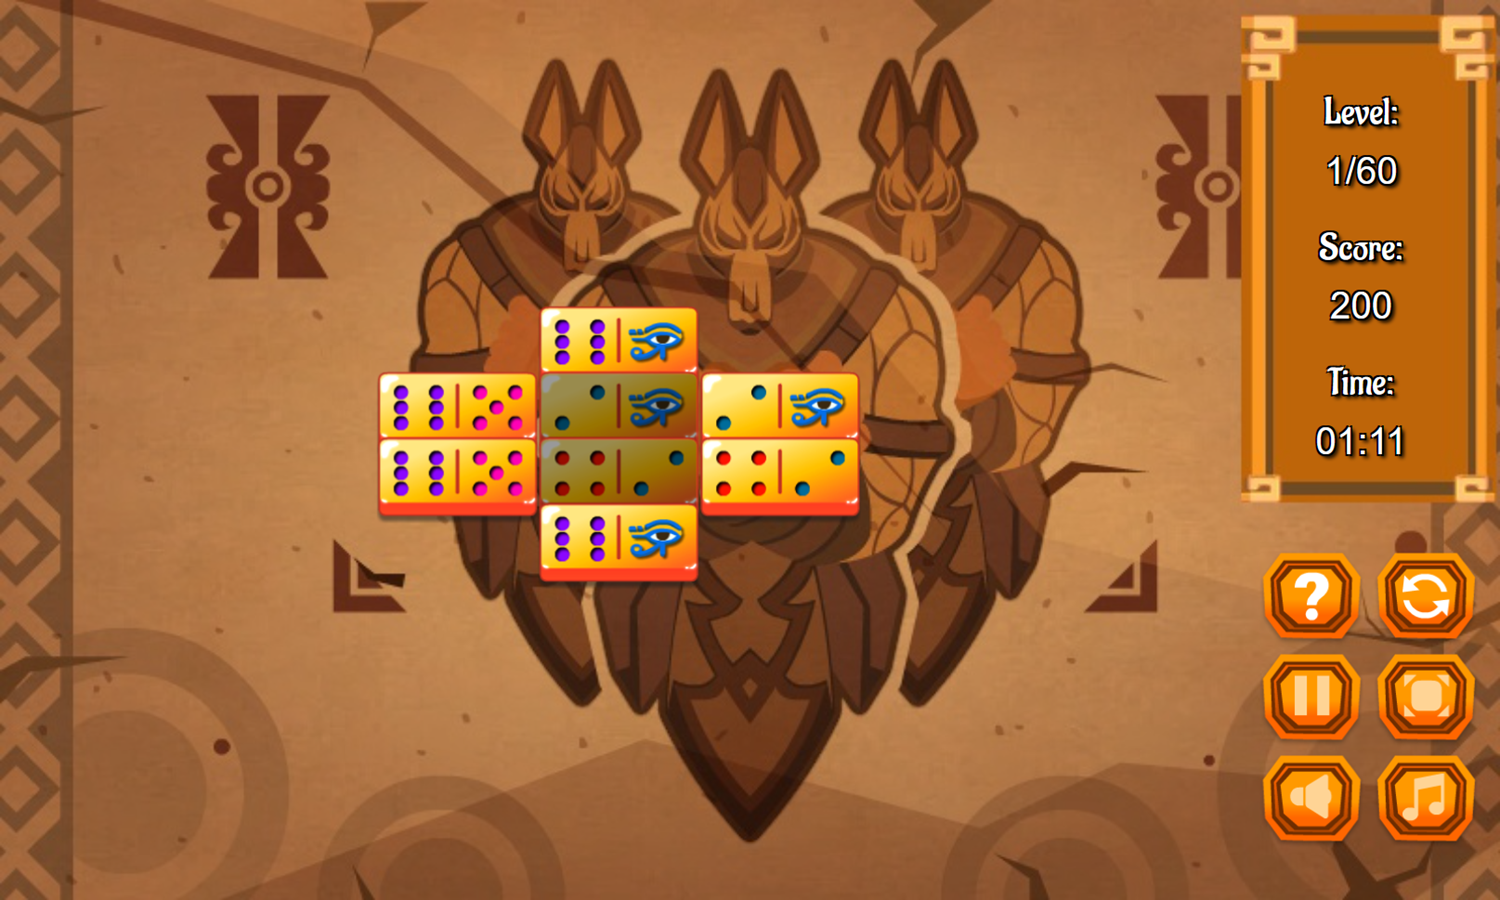 Mah-Domino Game Level Play Screenshot.